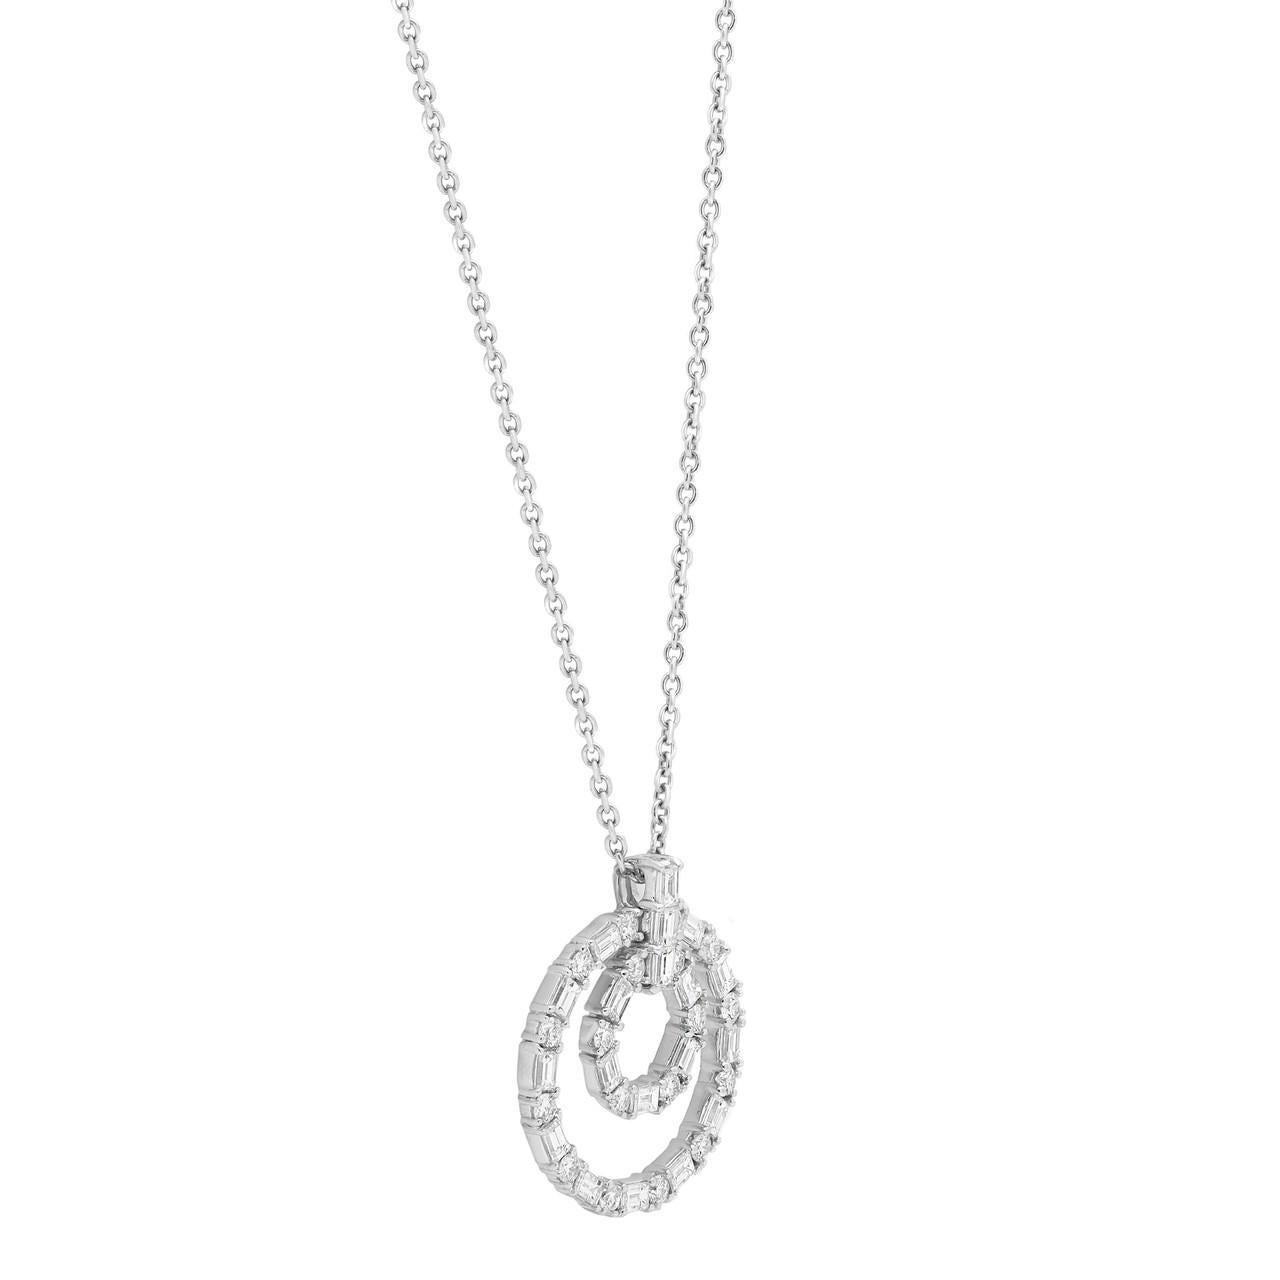 Baguette Cut 1.73 Carat Diamond Circle Pendant Necklace in 18K White Gold For Sale